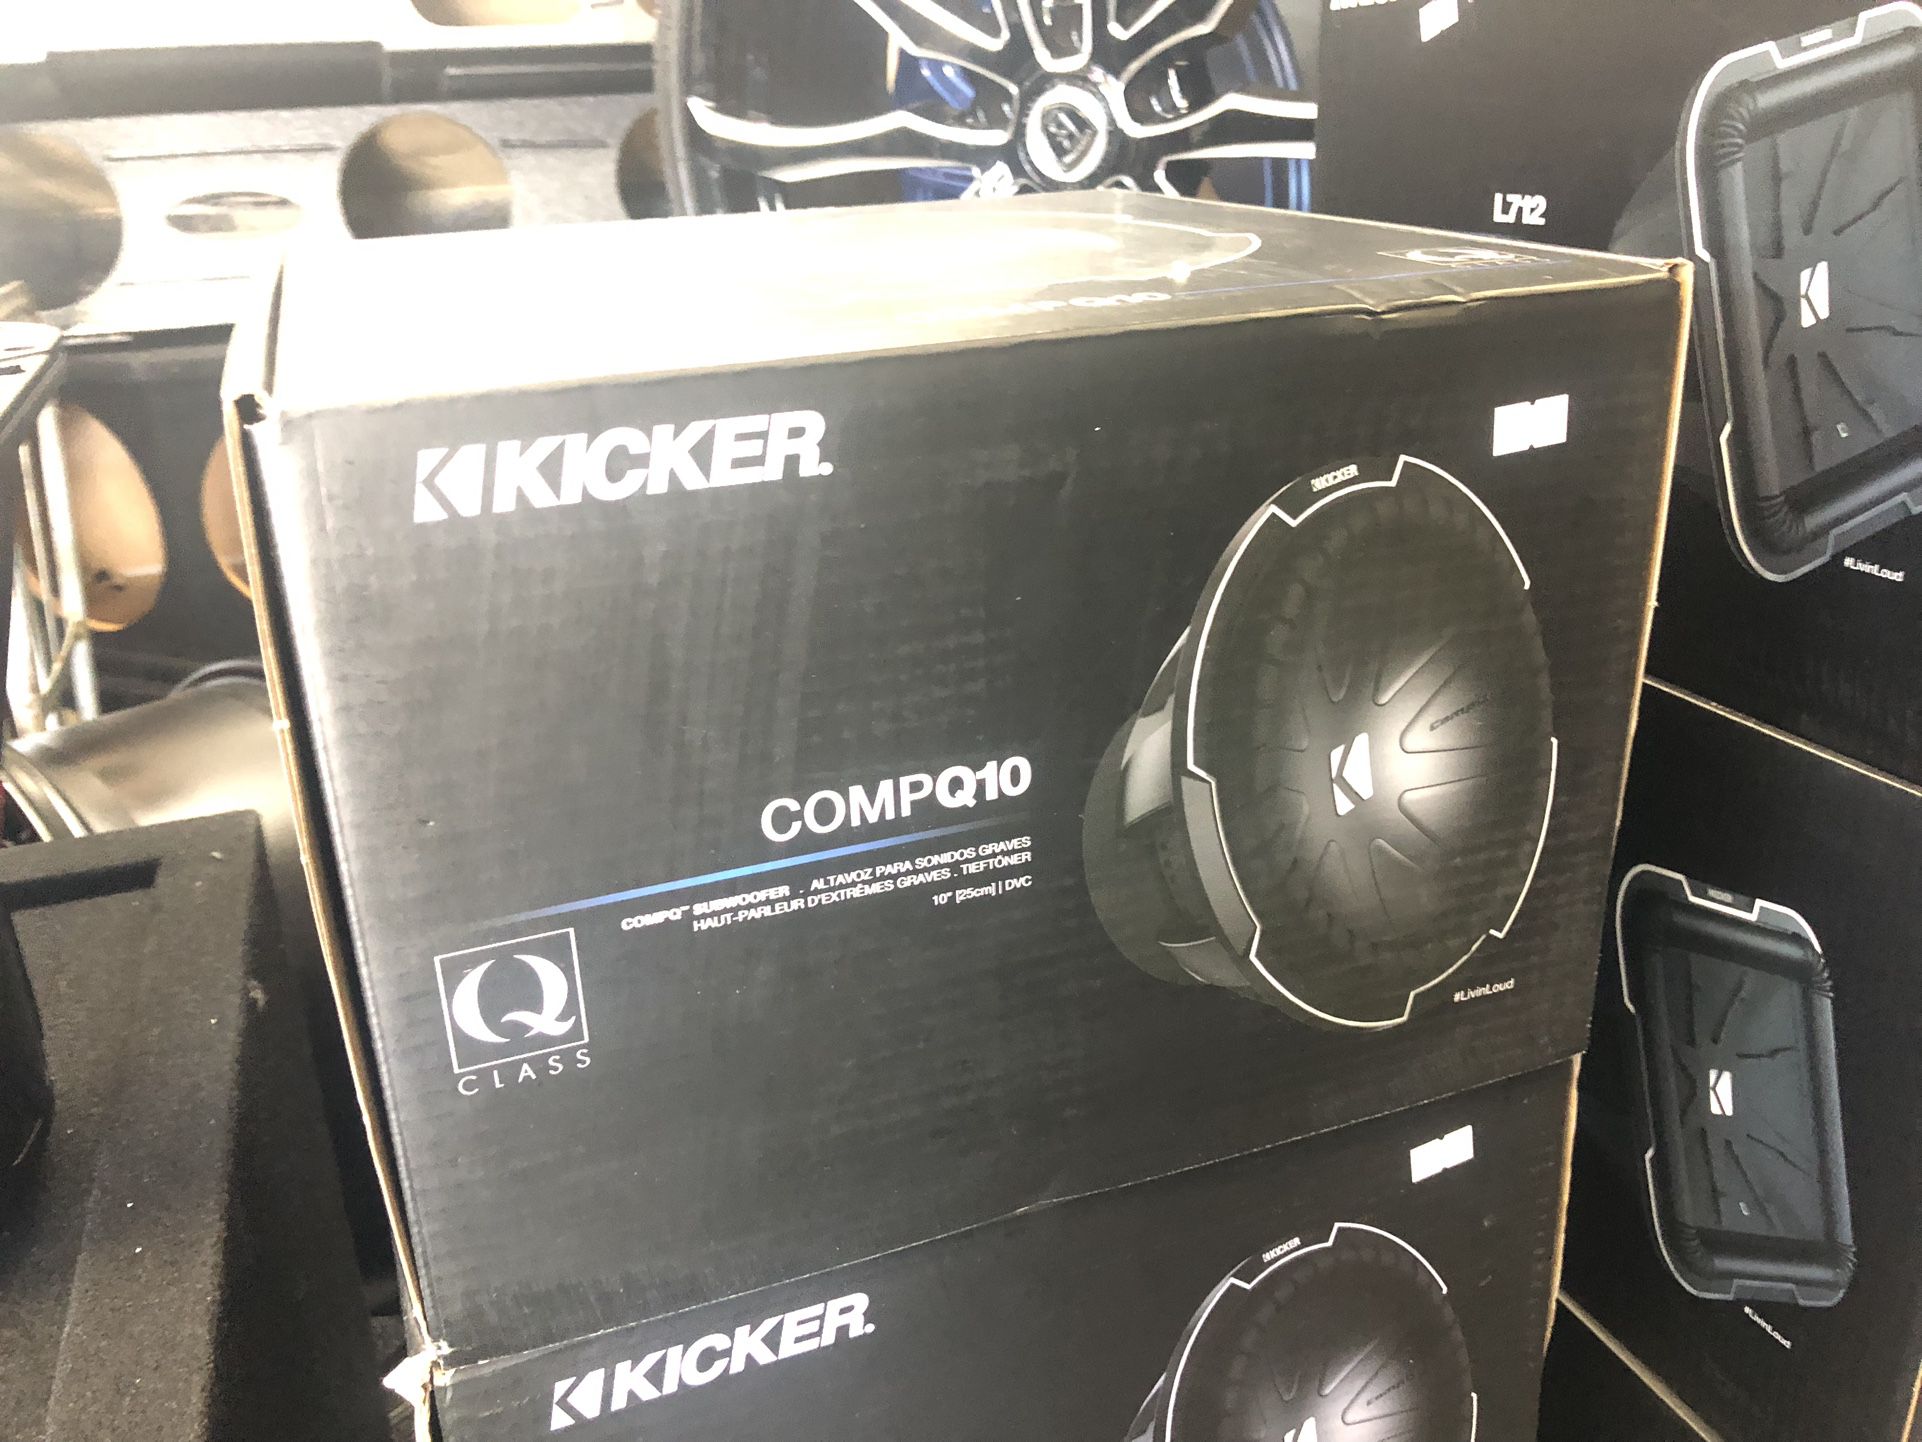 Kicker CompQ 10 On Sale For 229.99